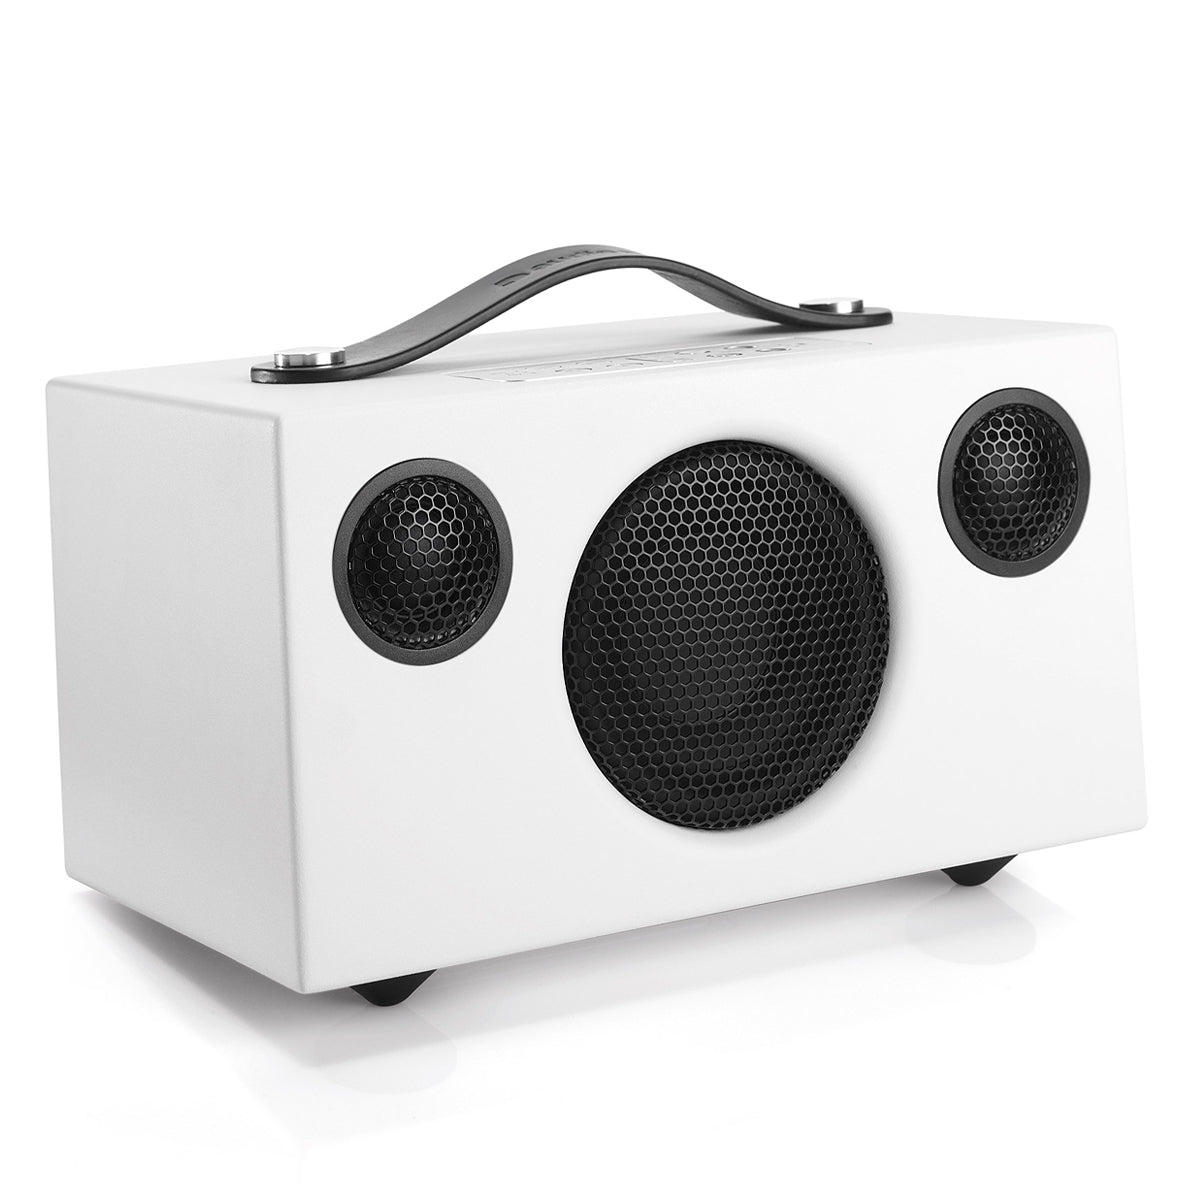 Audio Pro Addon C3 Portable Wireless Speaker - Arctic White - The Audio Experts